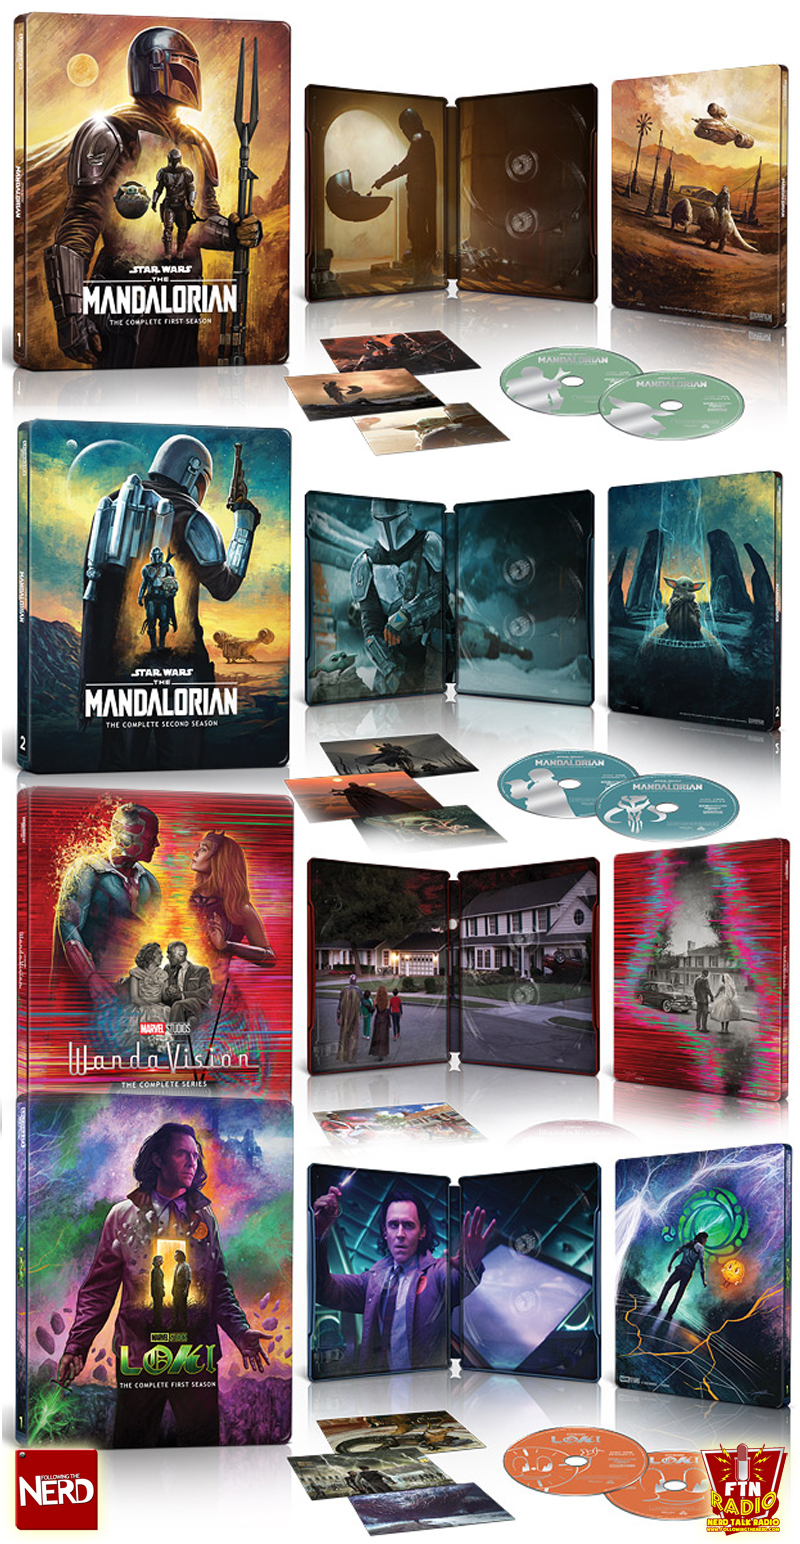 Disney+ Originals “WandaVisions”, “Loki” & “The Mandalorian” To Be Released  On 4K UHD & Blu Ray – What's On Disney Plus